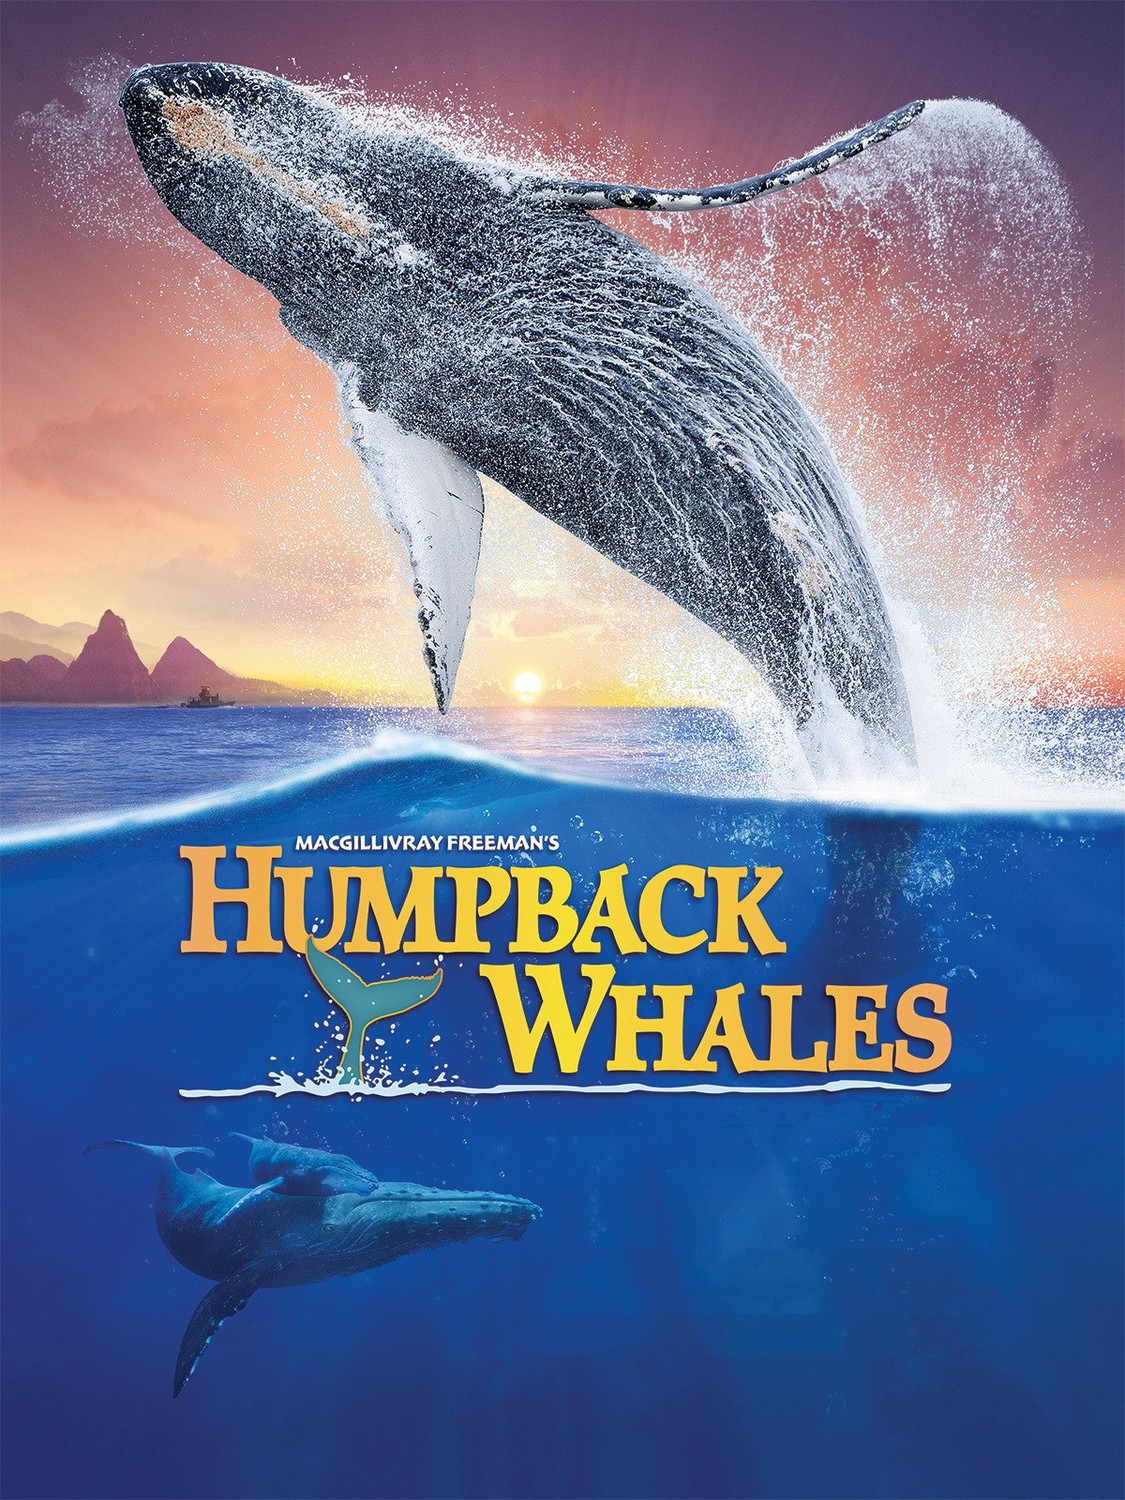 Humpback Whales (2015)